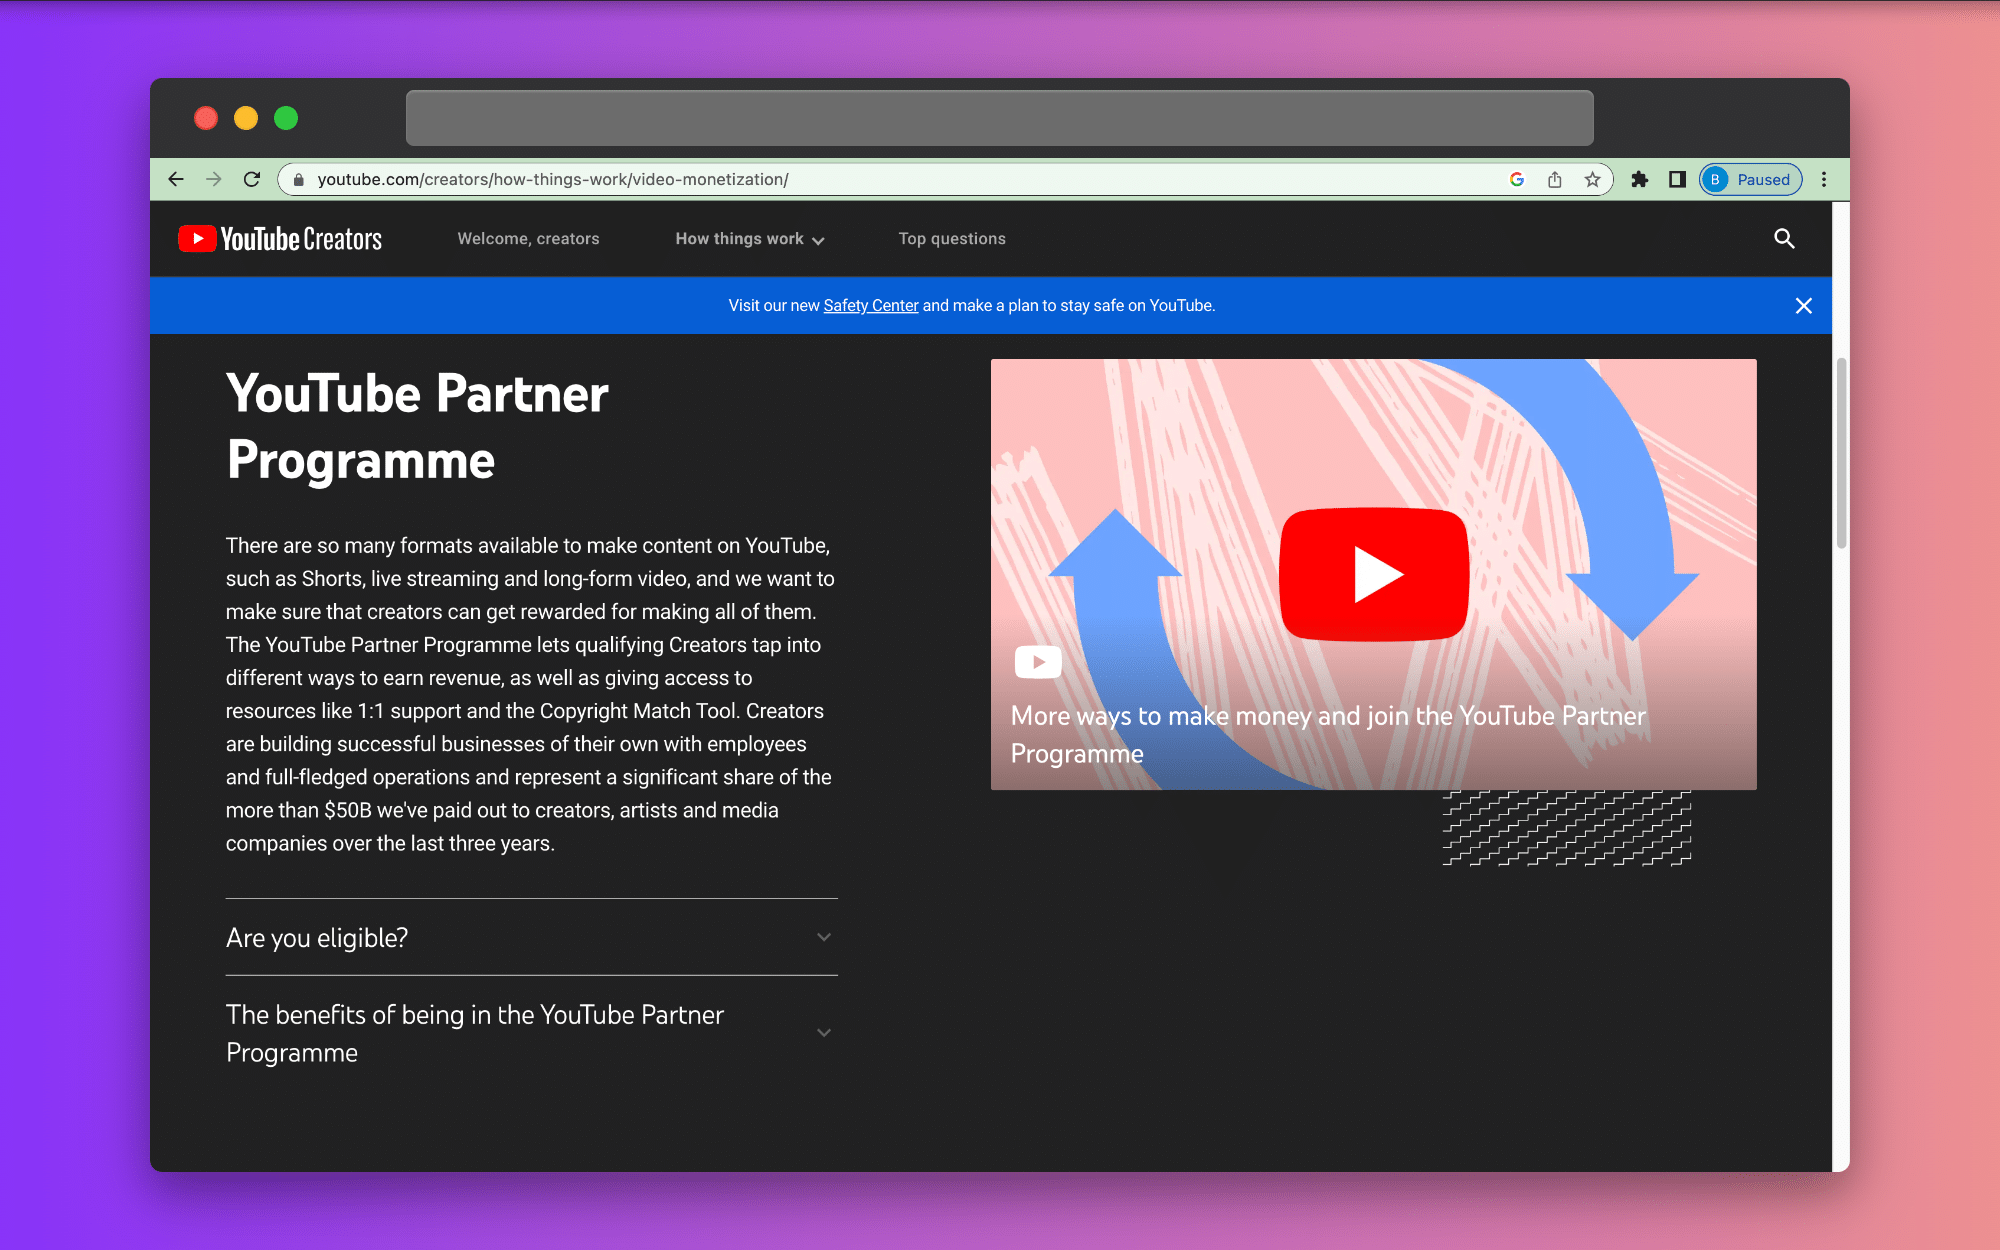  YouTube Partner Program page open on desktop